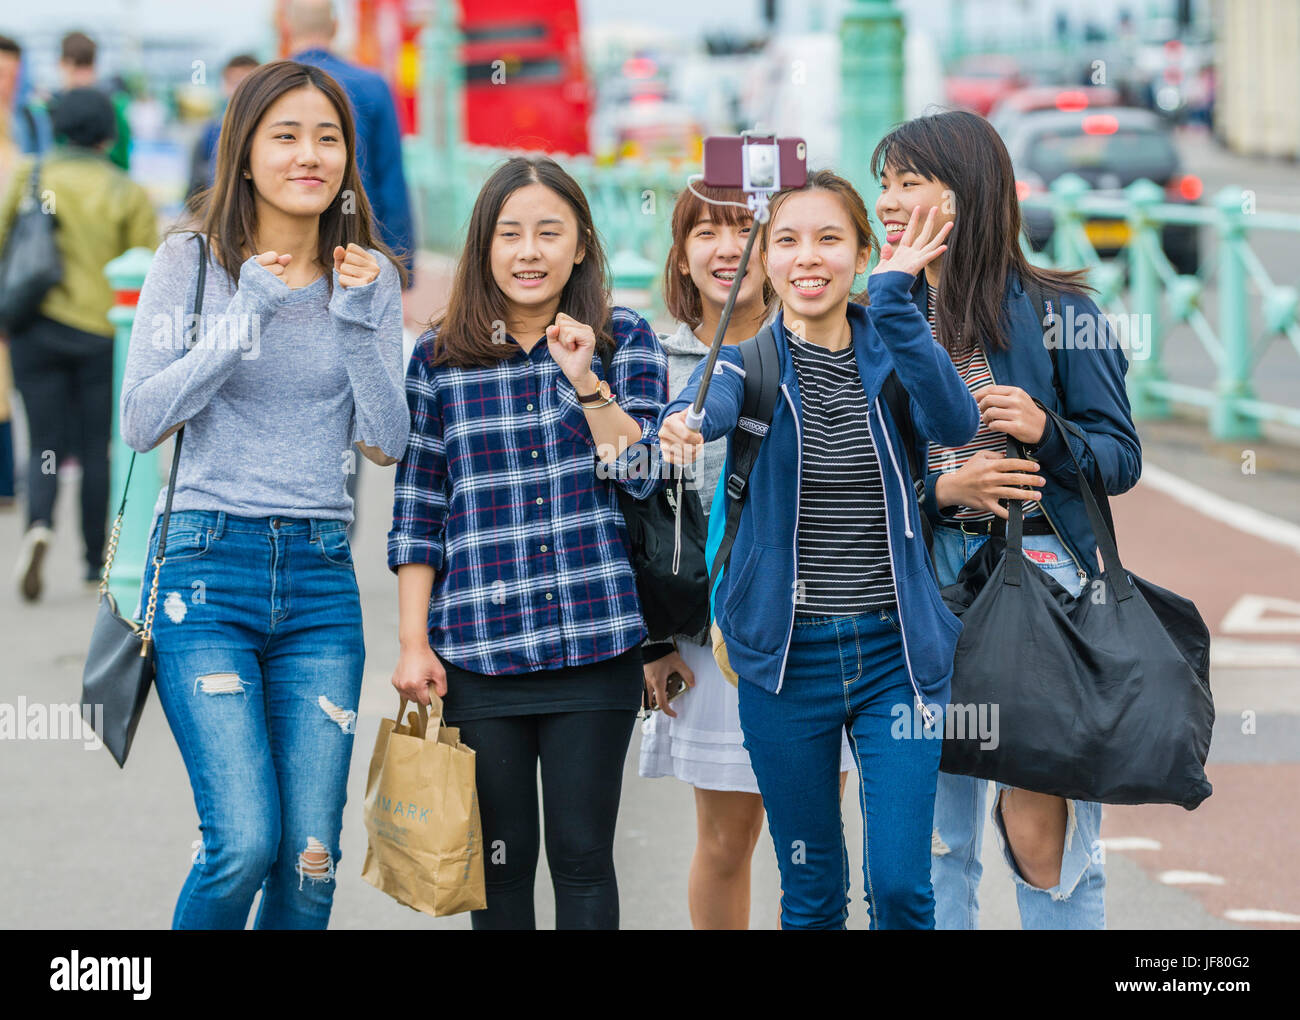 Prendendo un selfie. Gruppo di amici asiatici prendendo un gruppo selfie utilizzando uno smartphone su un bastone selfie. Foto Stock